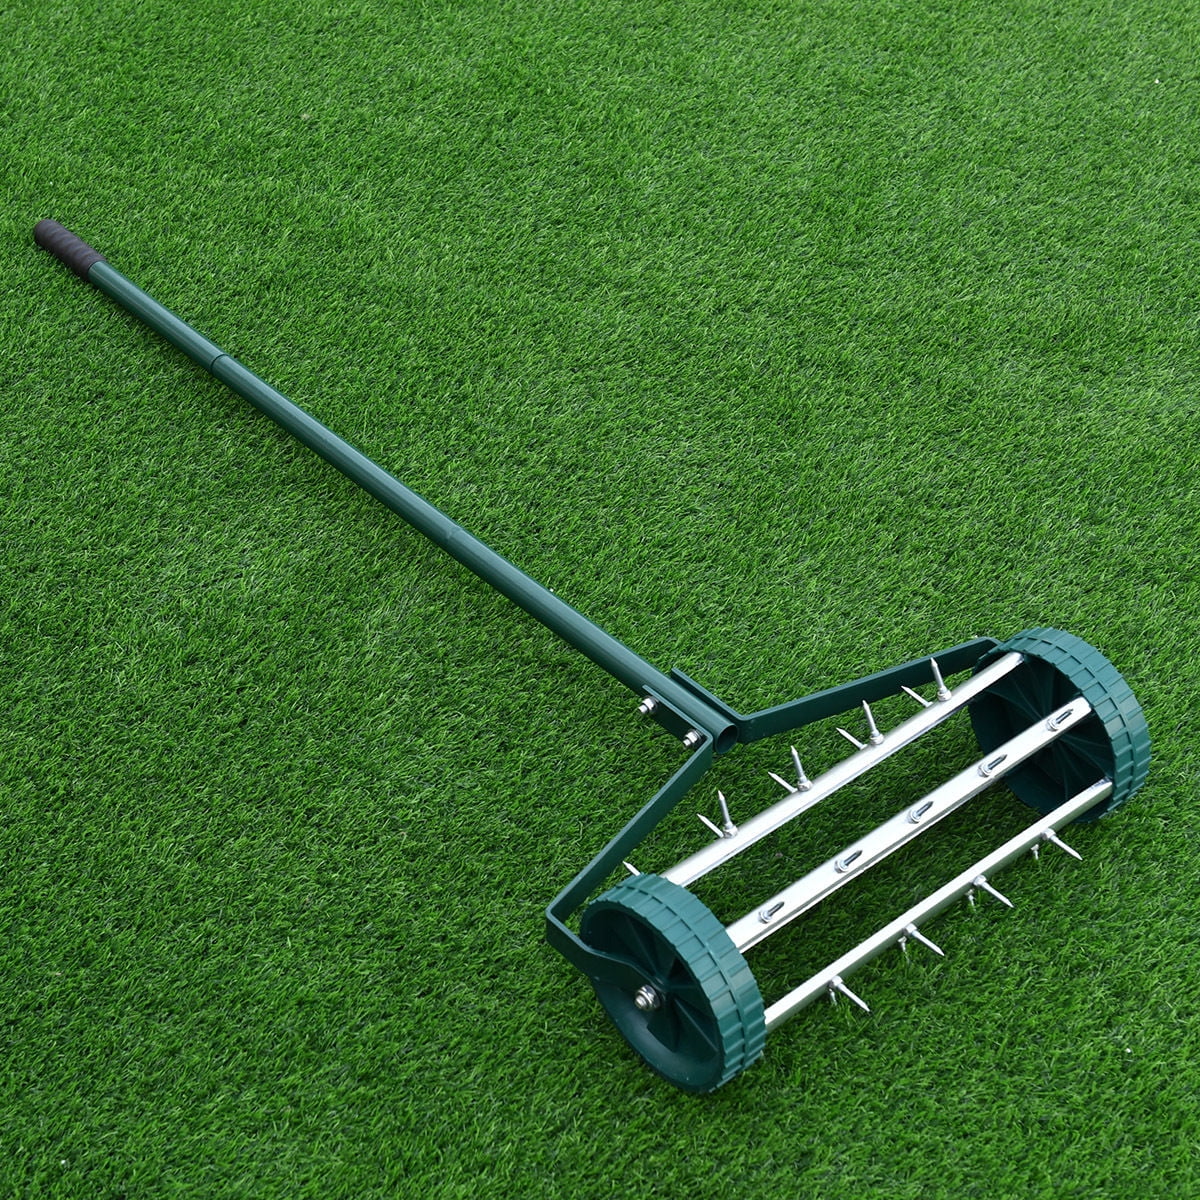 BoTaiDaHong Rolling Lawn Aerator Gardening Tool for Grass Lawn Home Garden Yard Rotary Push Tine Spike Soil Aeration Heavy Duty 